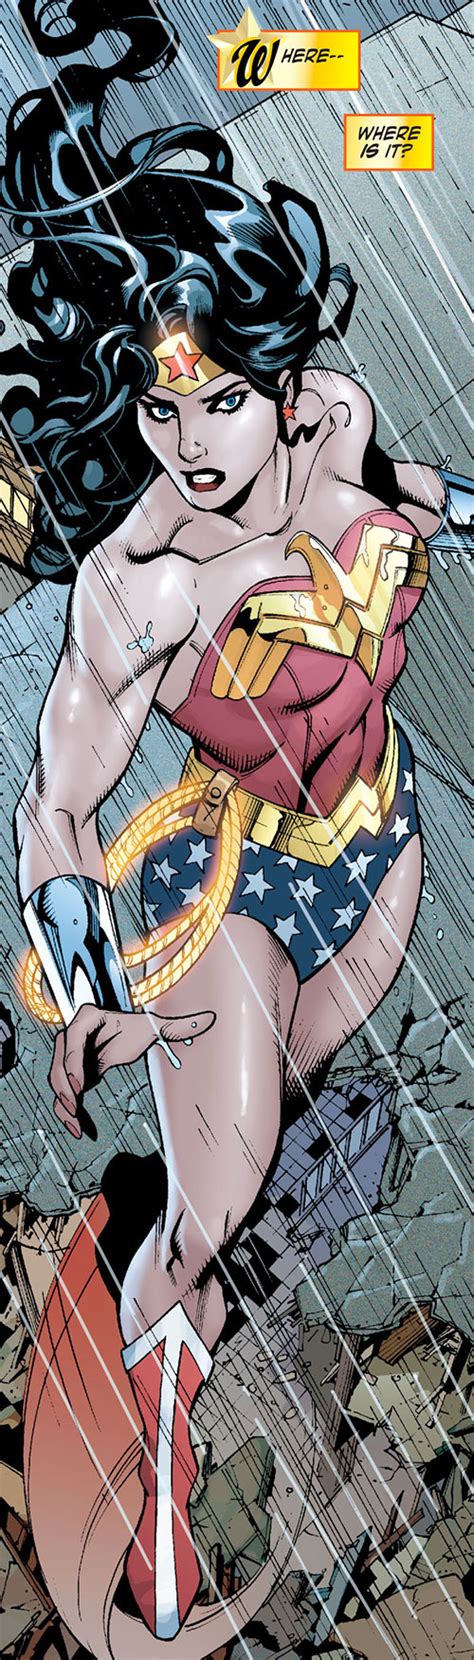 Wonder Woman Dc Comics Character Profile Gail Simone